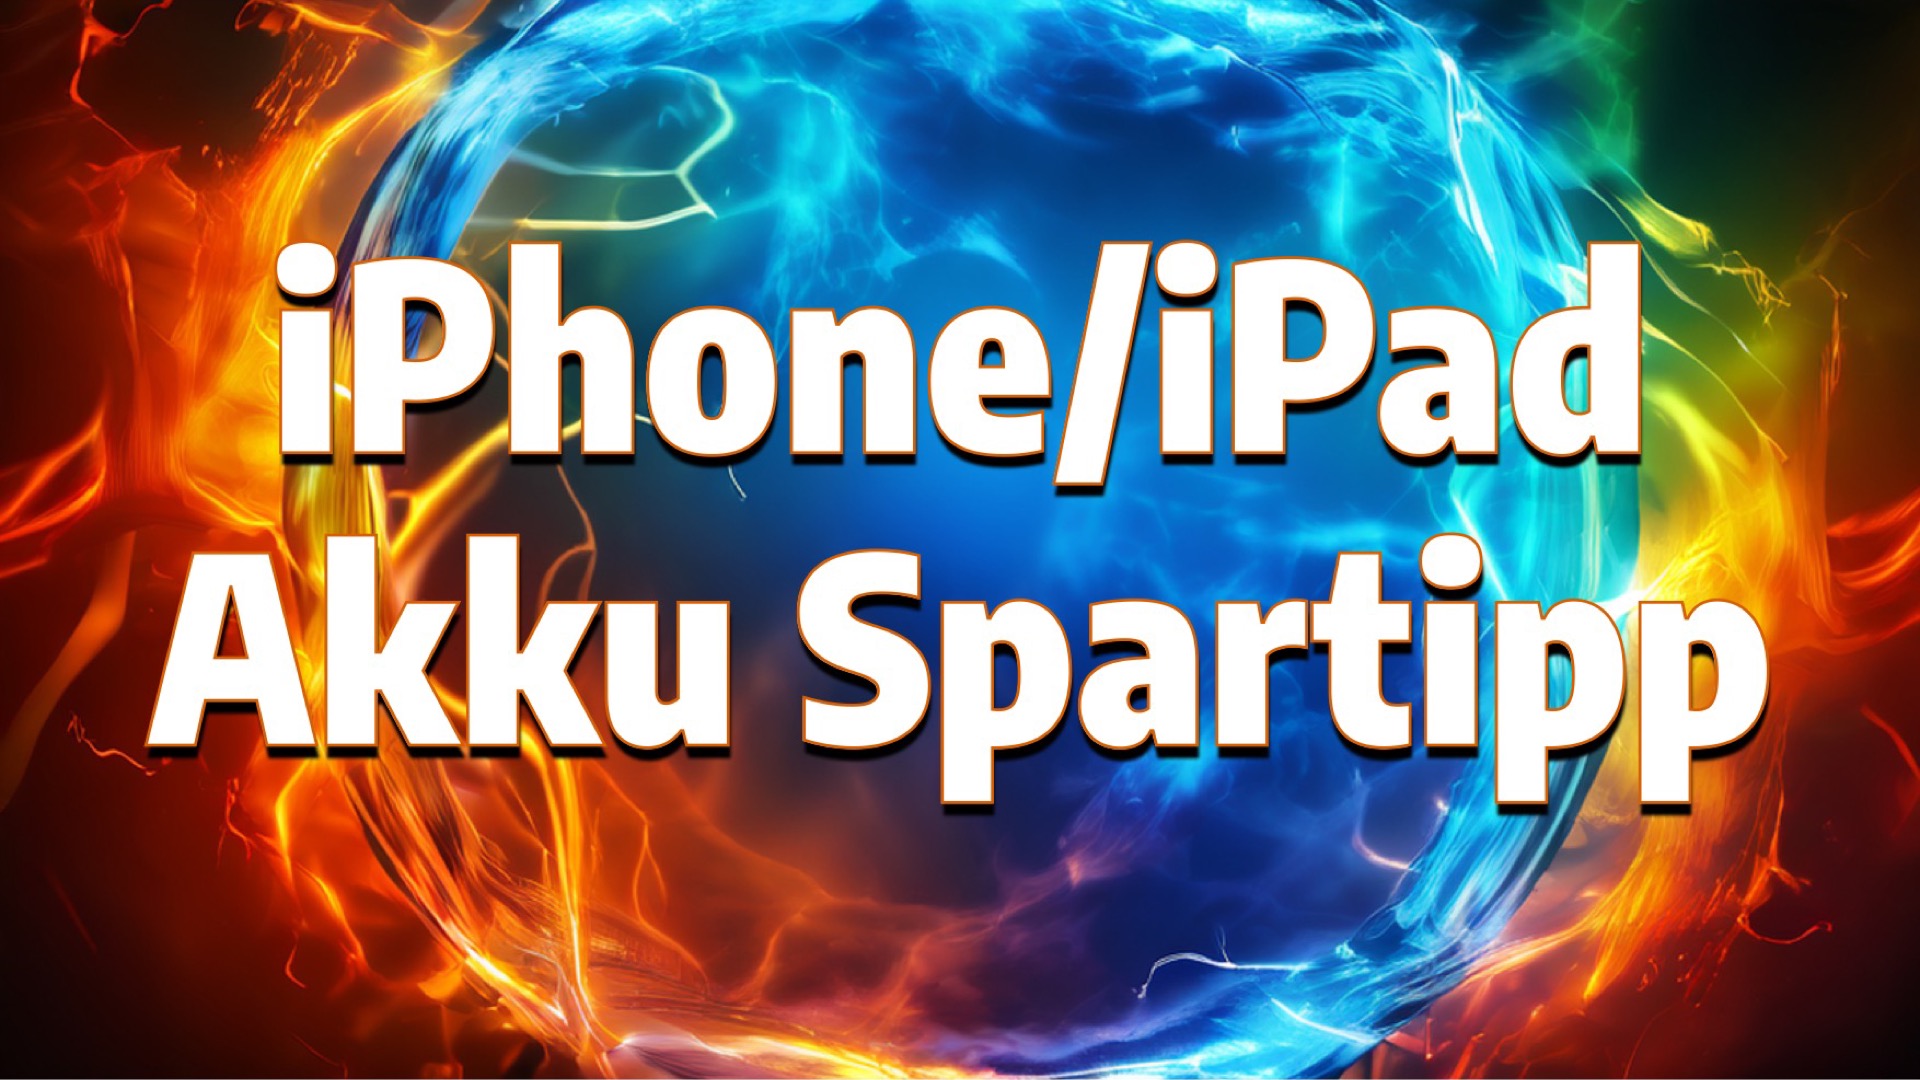 Image for iPhone/iPad Akku Spartipp